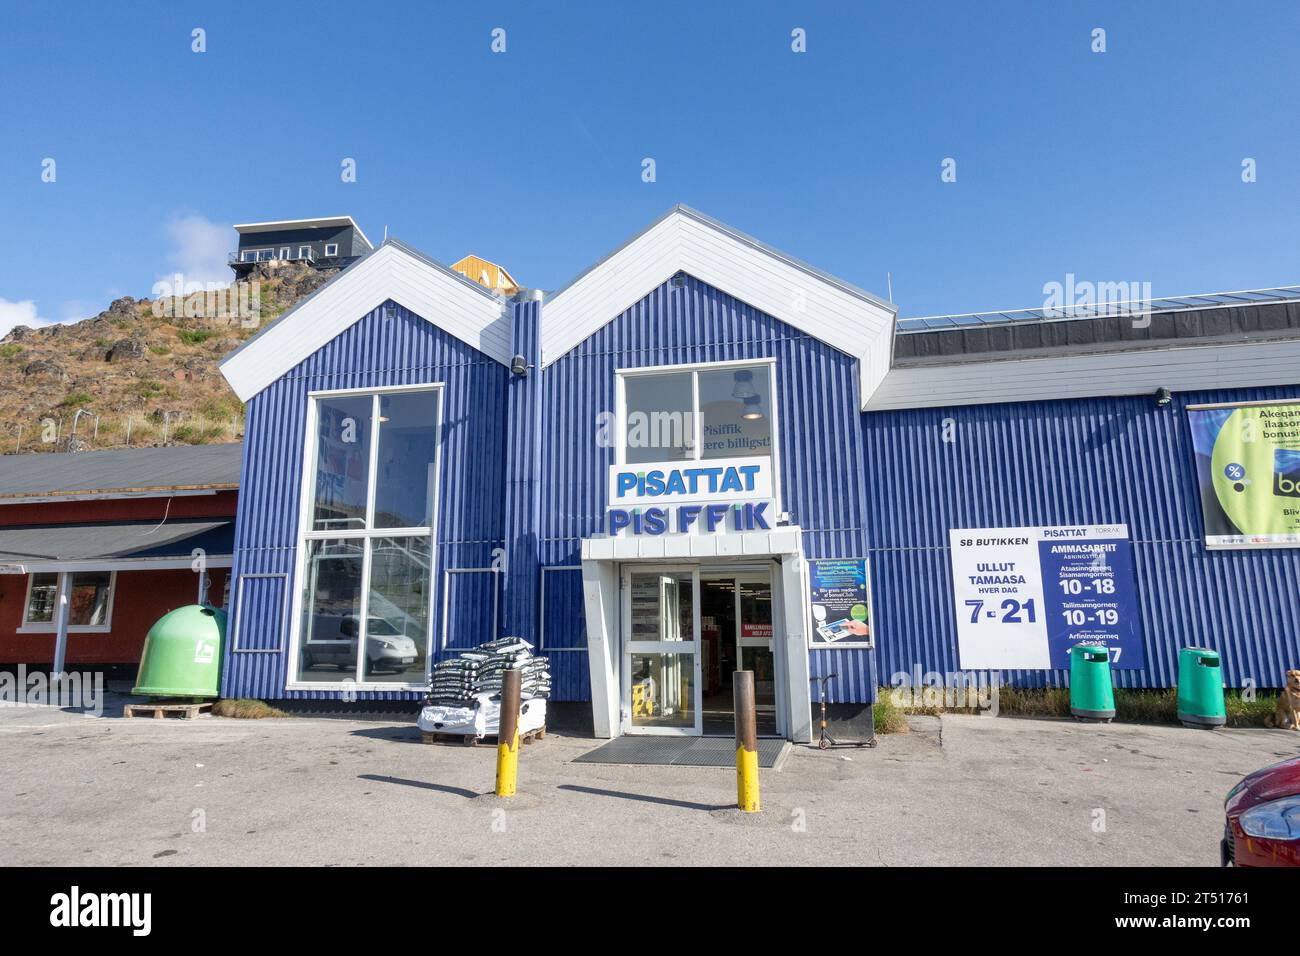 Pisiffik Supermarket Qaqortoq Greenland Largest Supermarket Chain In Greenland Over 50 Stores Includes Pisattat A Furniture Retailer Stock Photo